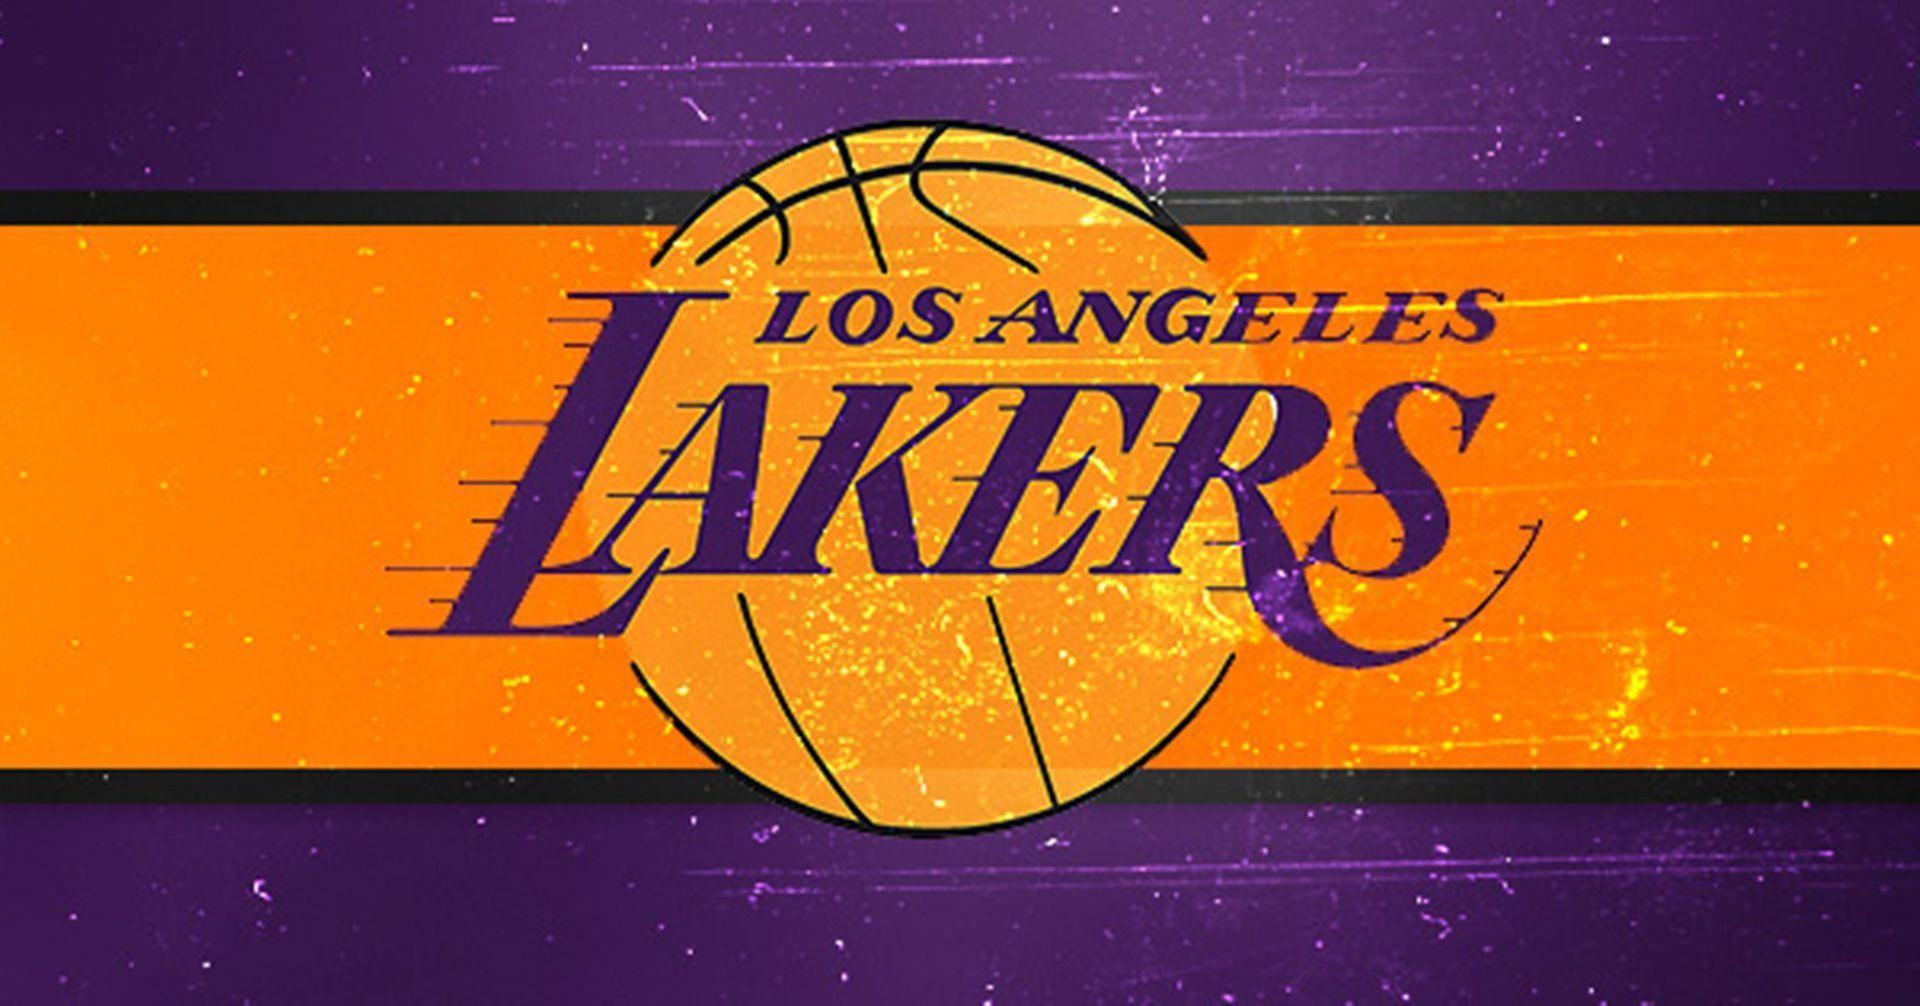 Los Angeles Lakers Logo Wallpaper. HD Wallpaper and Download Free